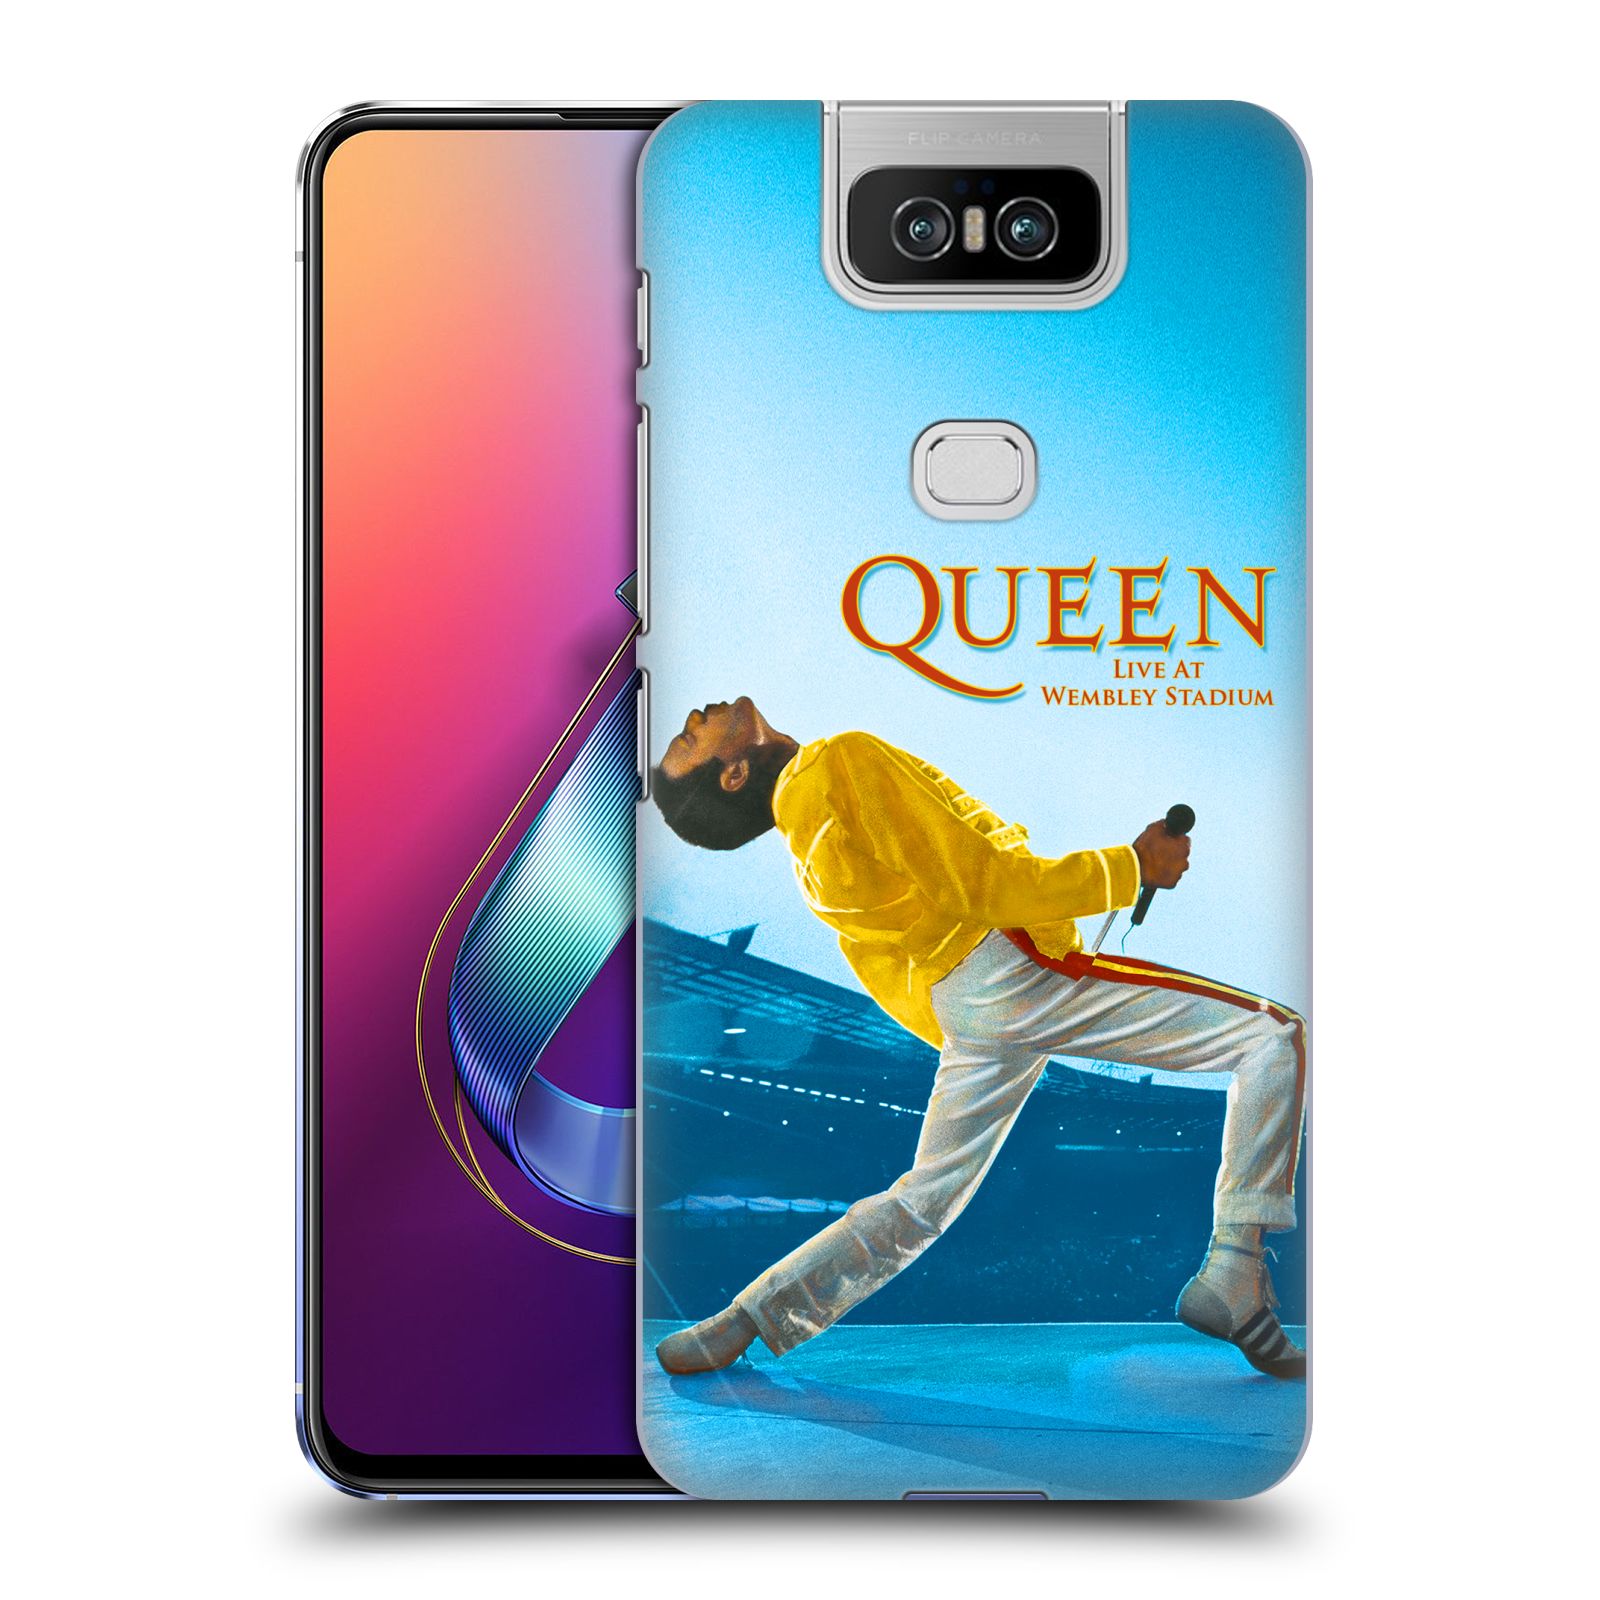 Pouzdro na mobil Asus Zenfone 6 ZS630KL - HEAD CASE - zpěvák Queen skupina Freddie Mercury